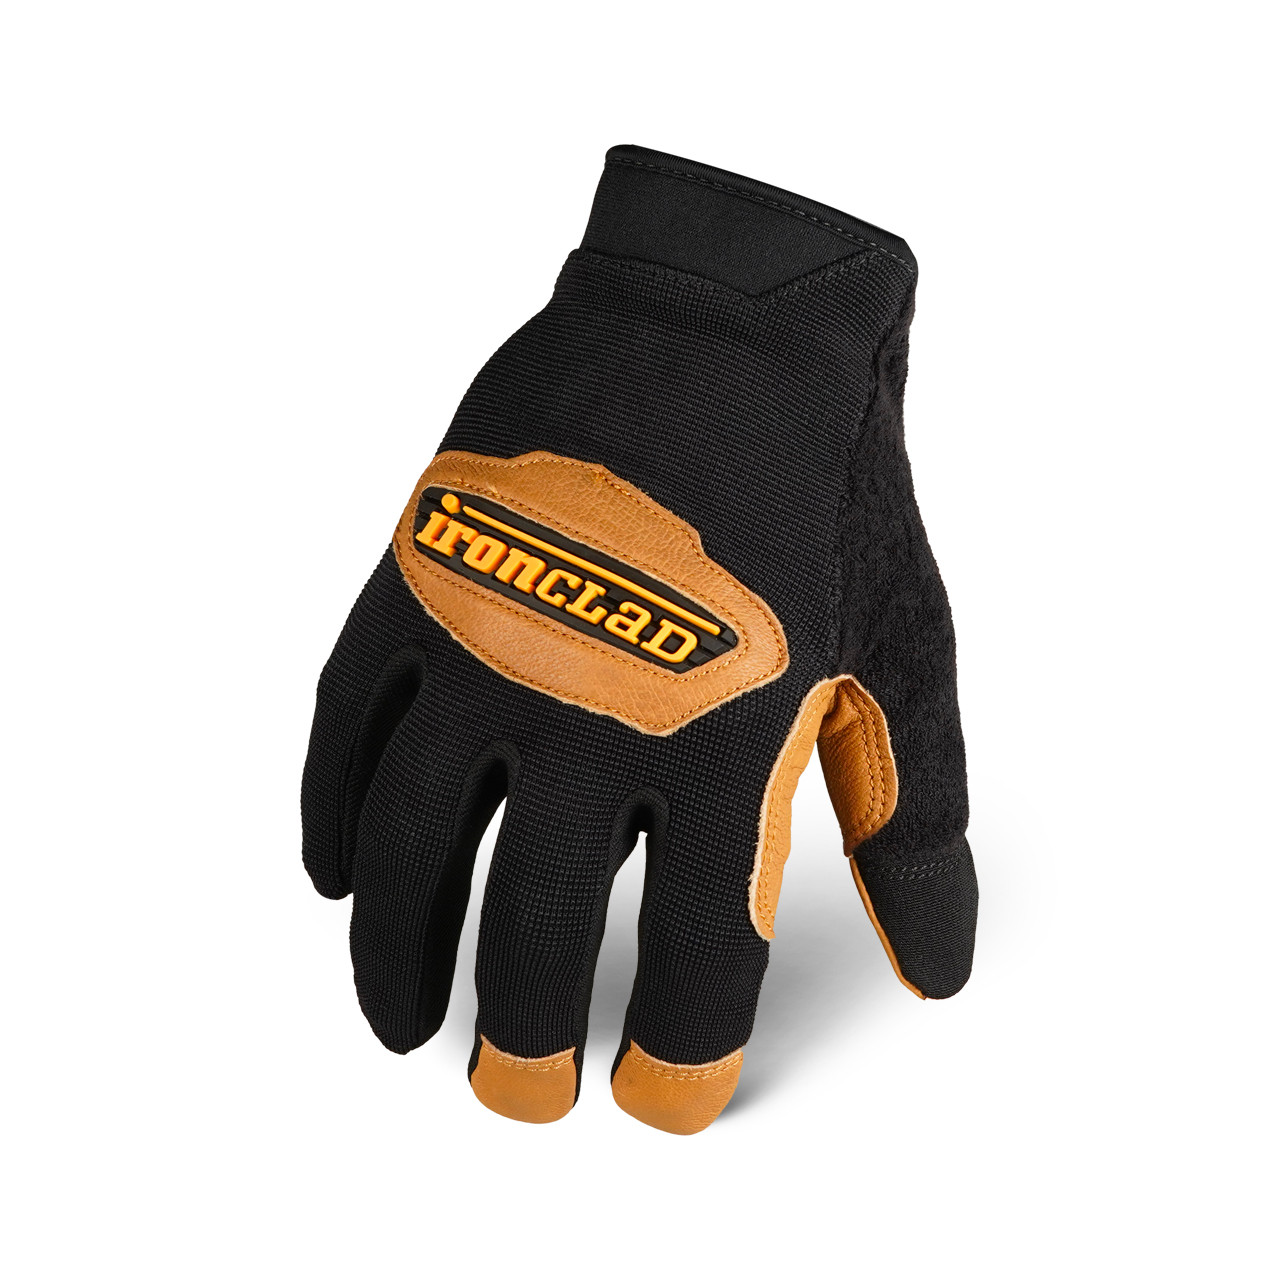 Ironclad Ranchworx Large Leather Gloves, Black/Tan